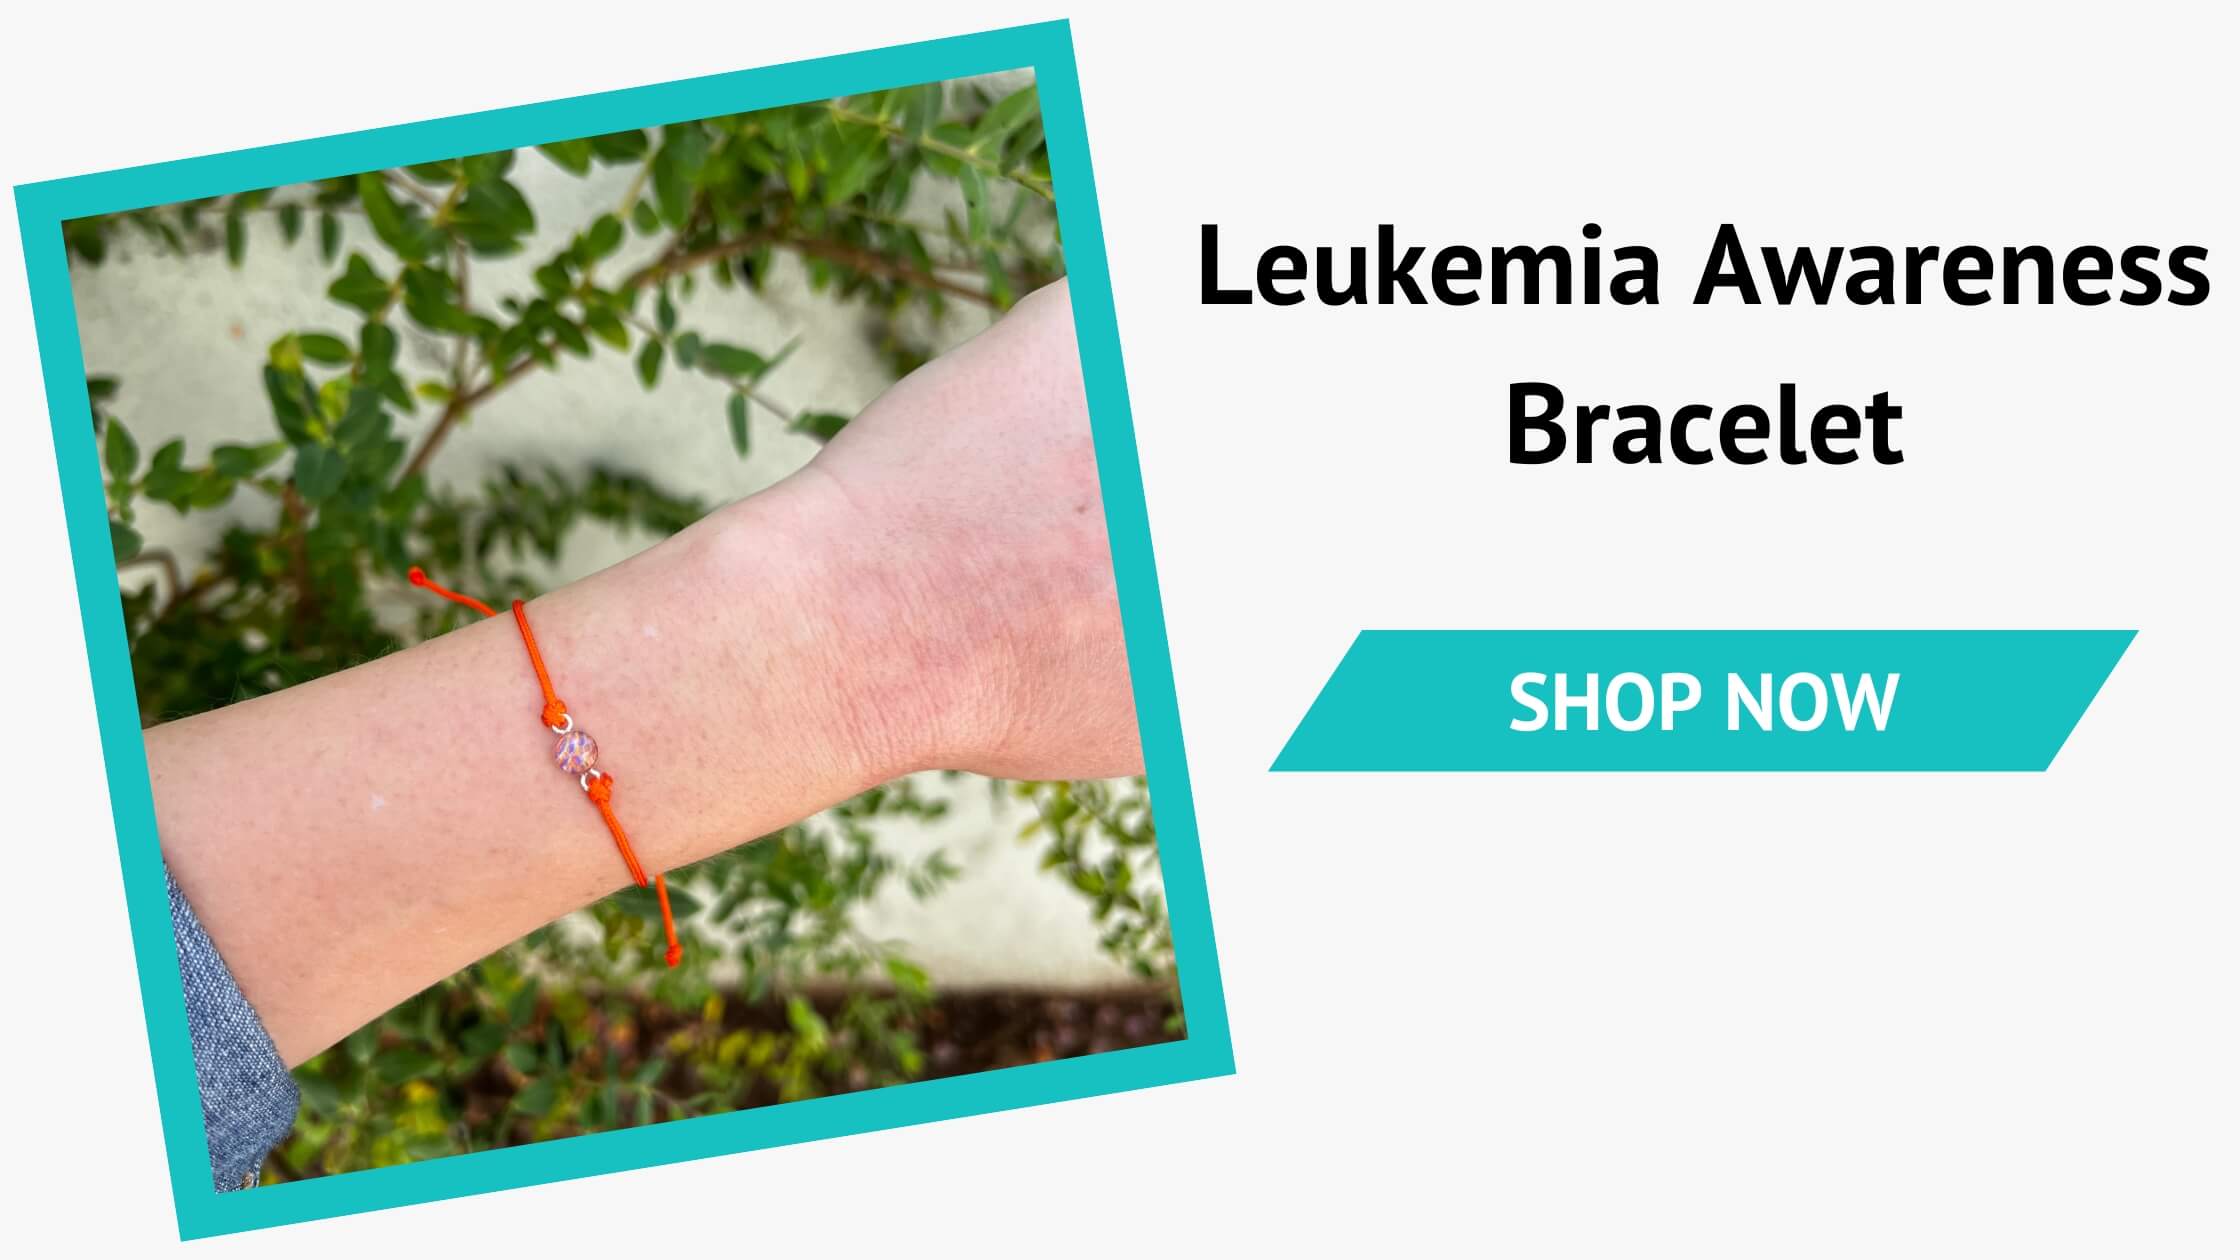 leukemia awareness bracelet on model